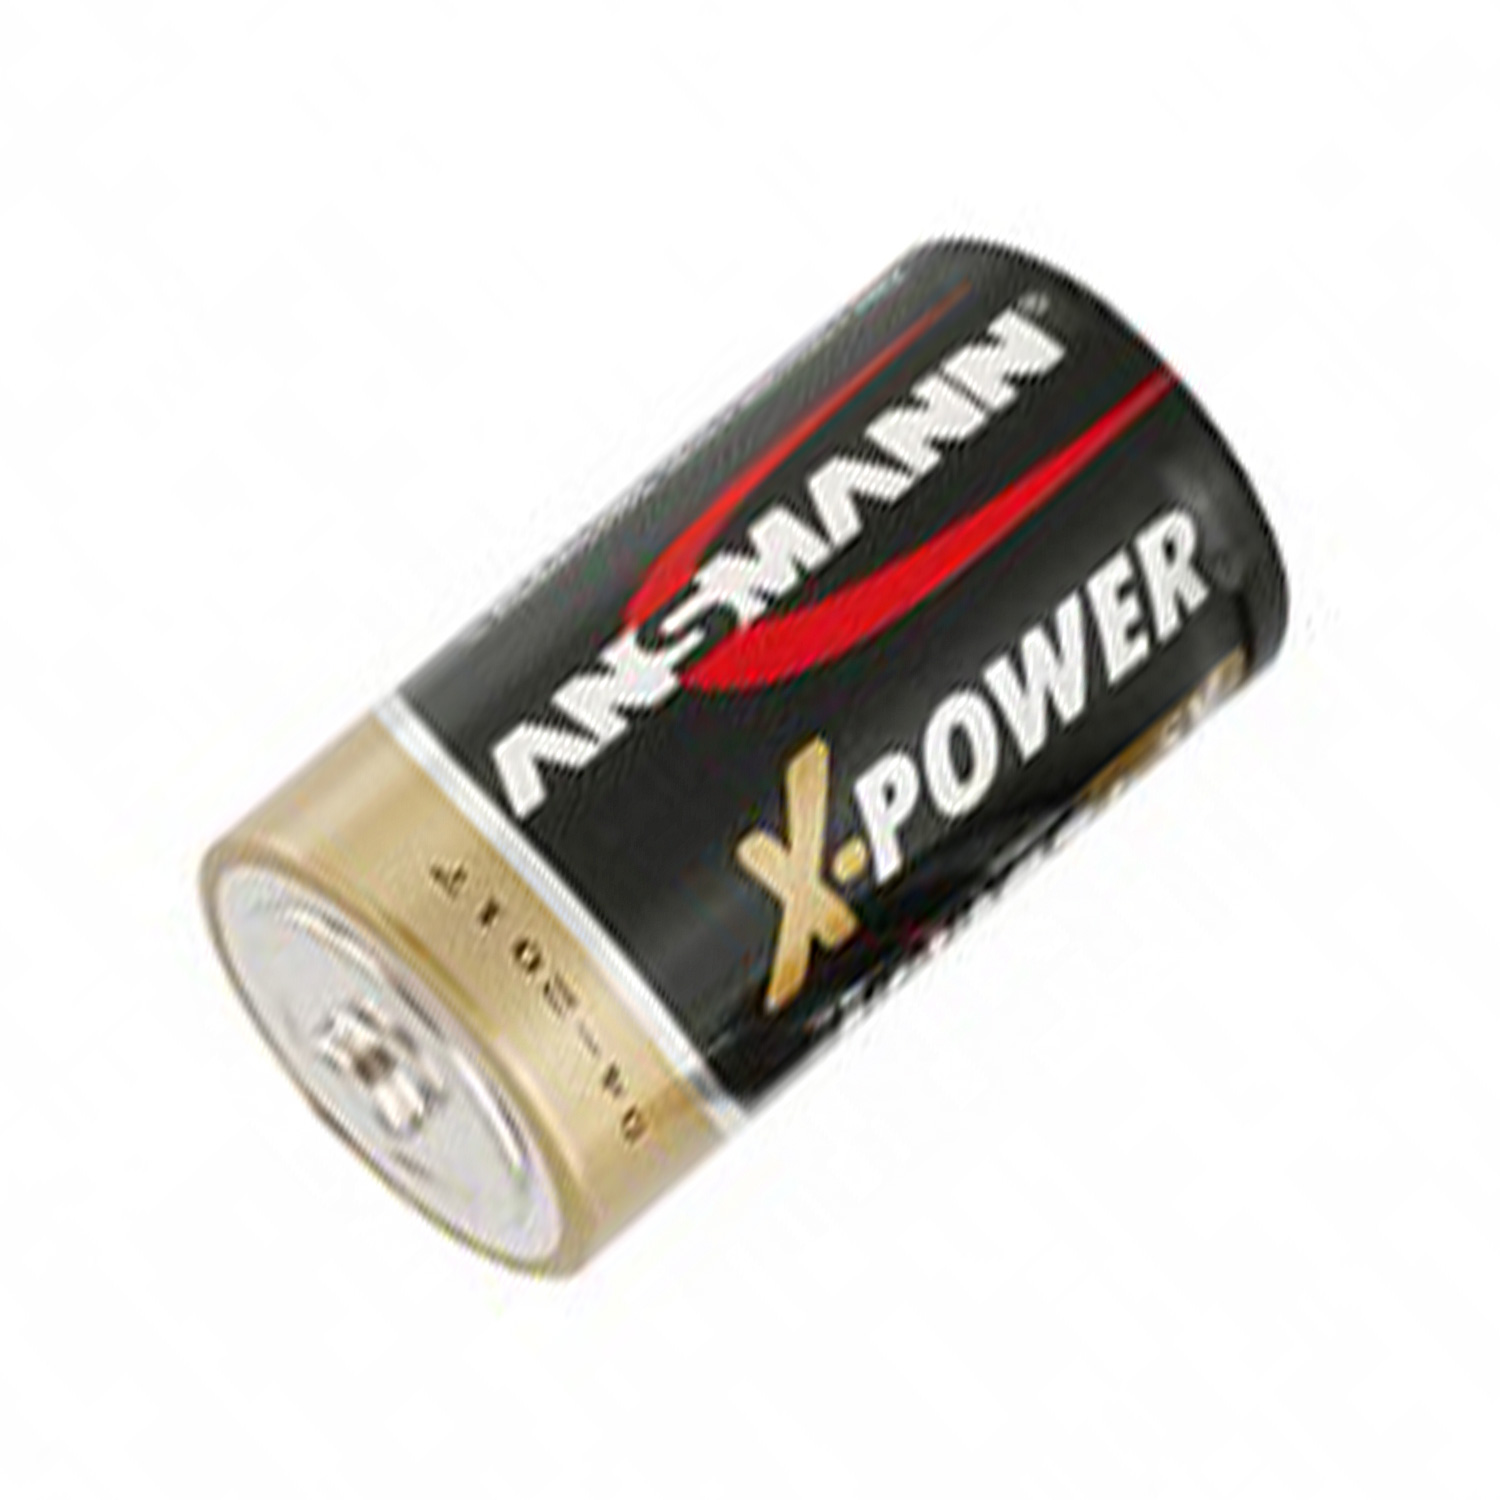 PHILIPS Power alkaline batteries LR14P2B / 05, Baby C LR14 1.5V, 2pcs